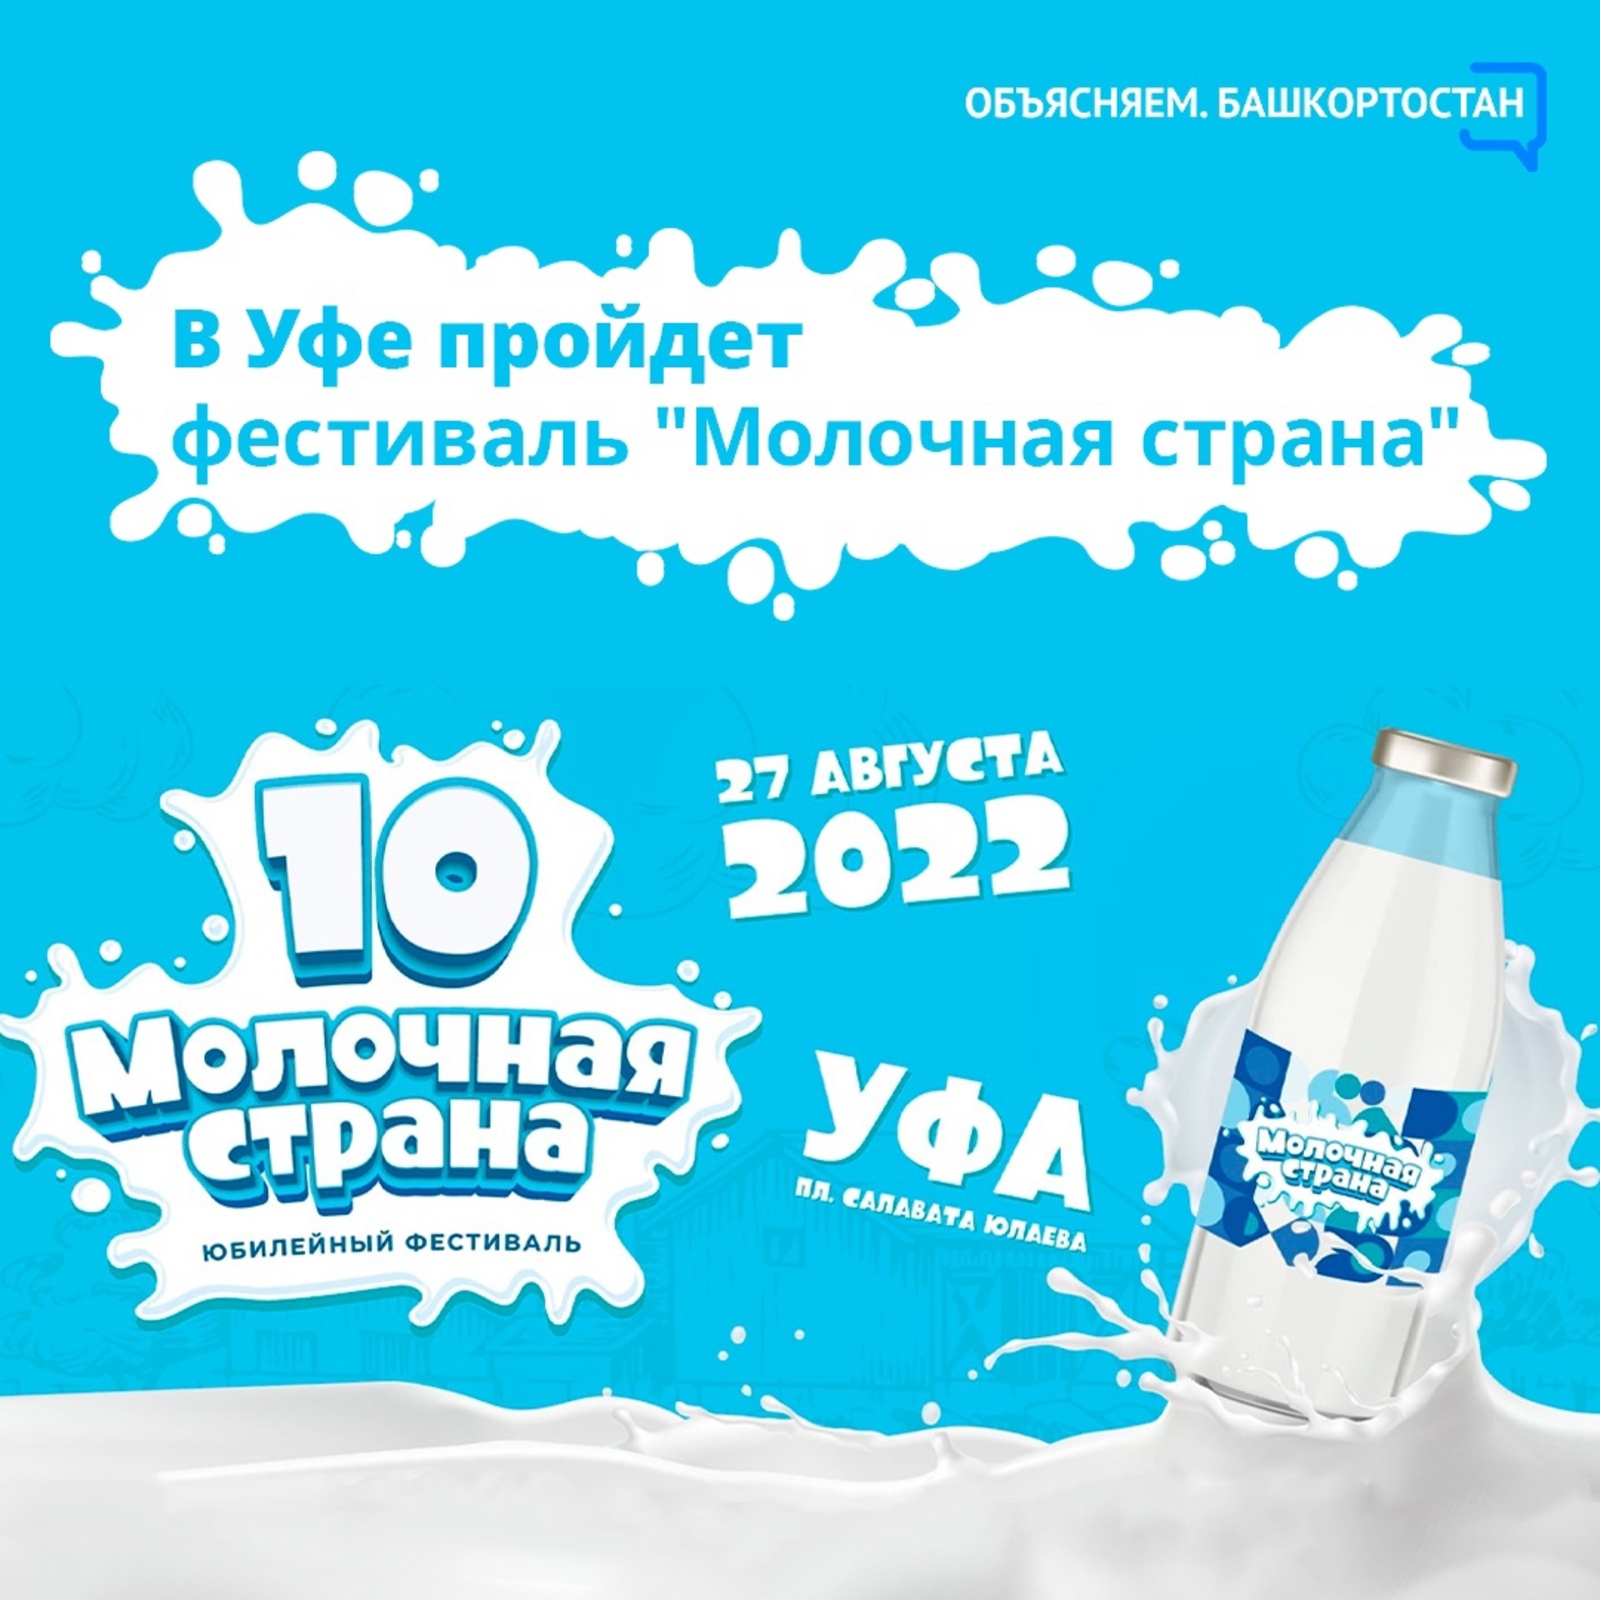 Праздник молока в Уфе!/Өфөлә һөт байрамы!